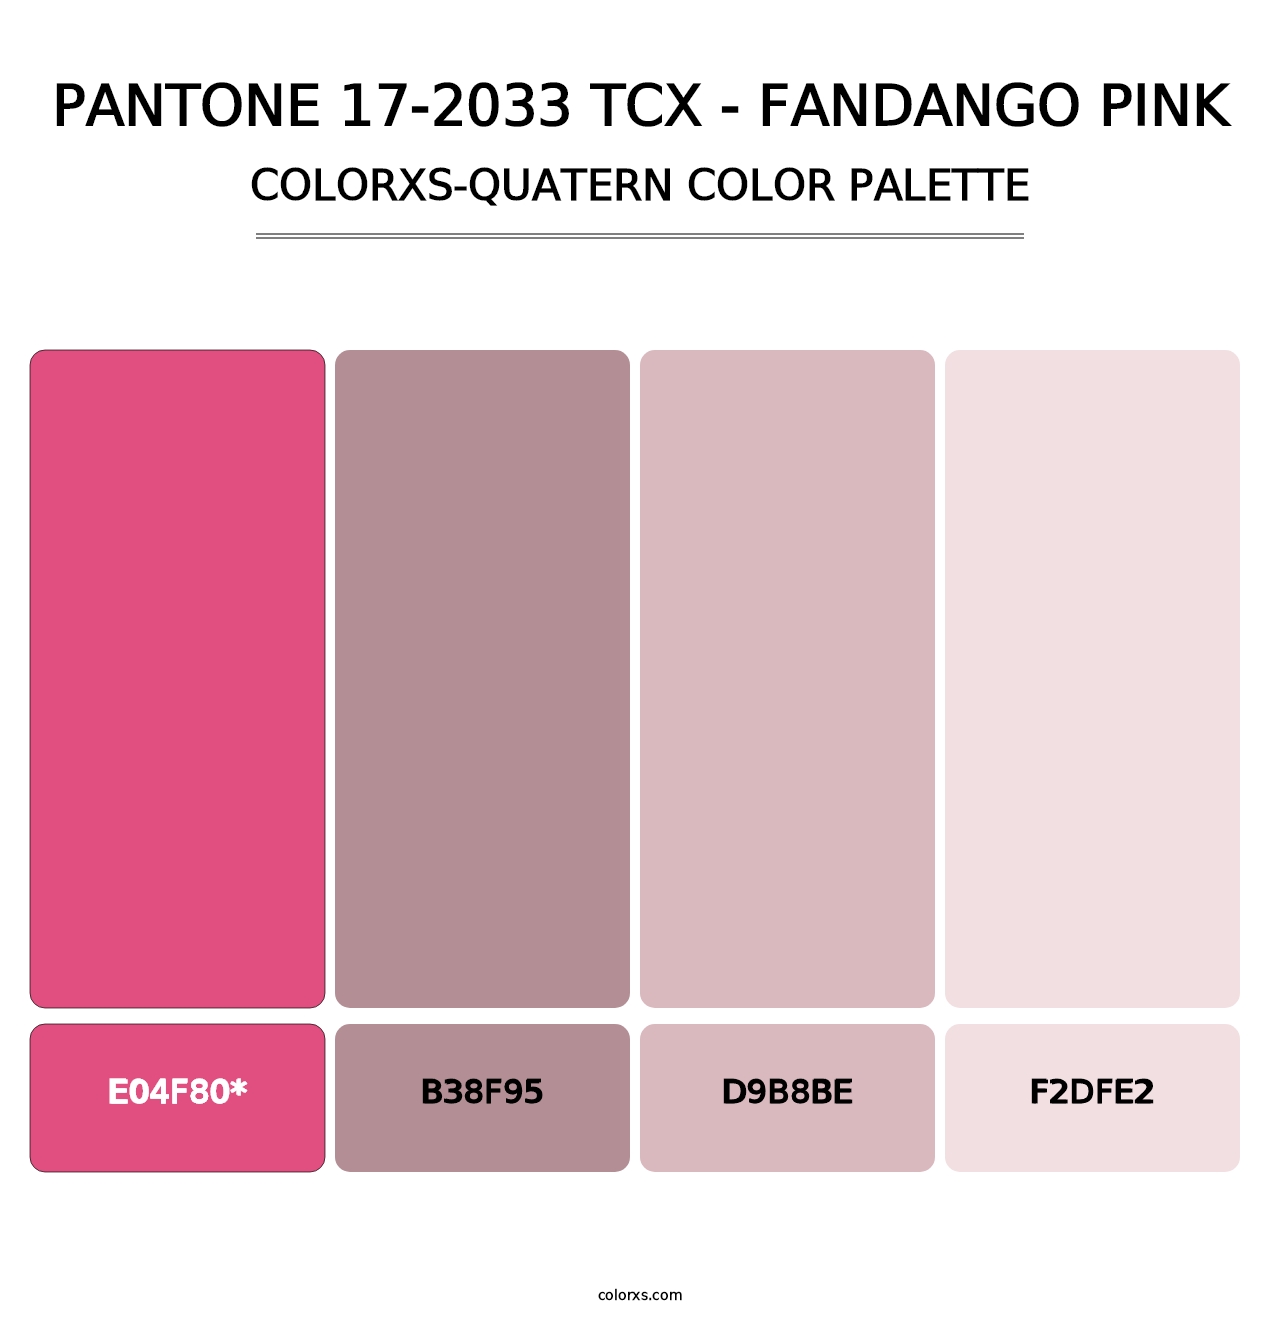 PANTONE 17-2033 TCX - Fandango Pink - Colorxs Quatern Palette